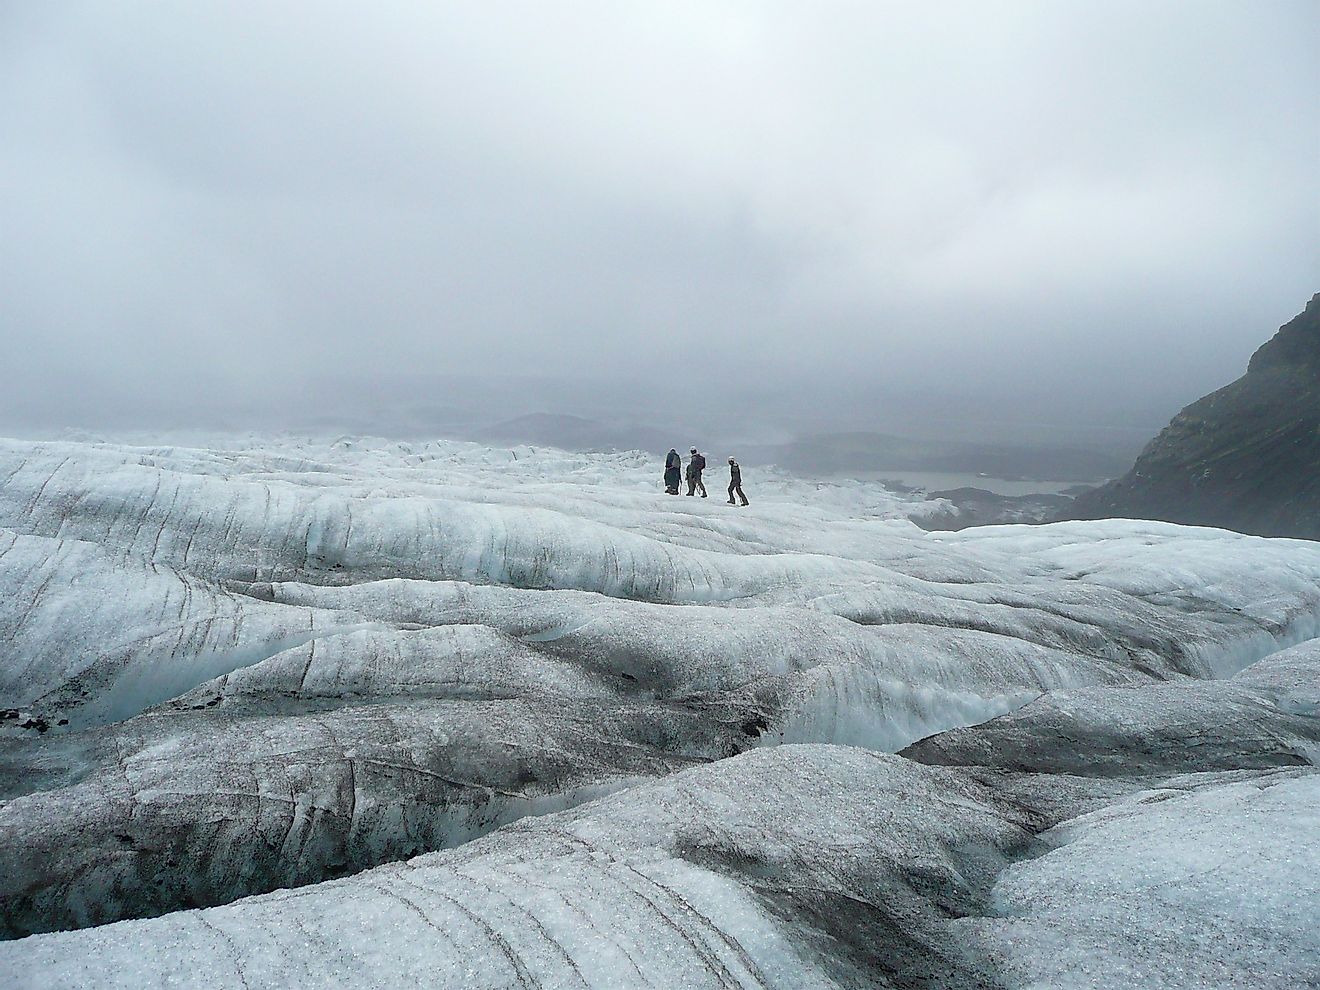 Svínafellsjökull Glacier. Image credit: kanbron/Flickr.com